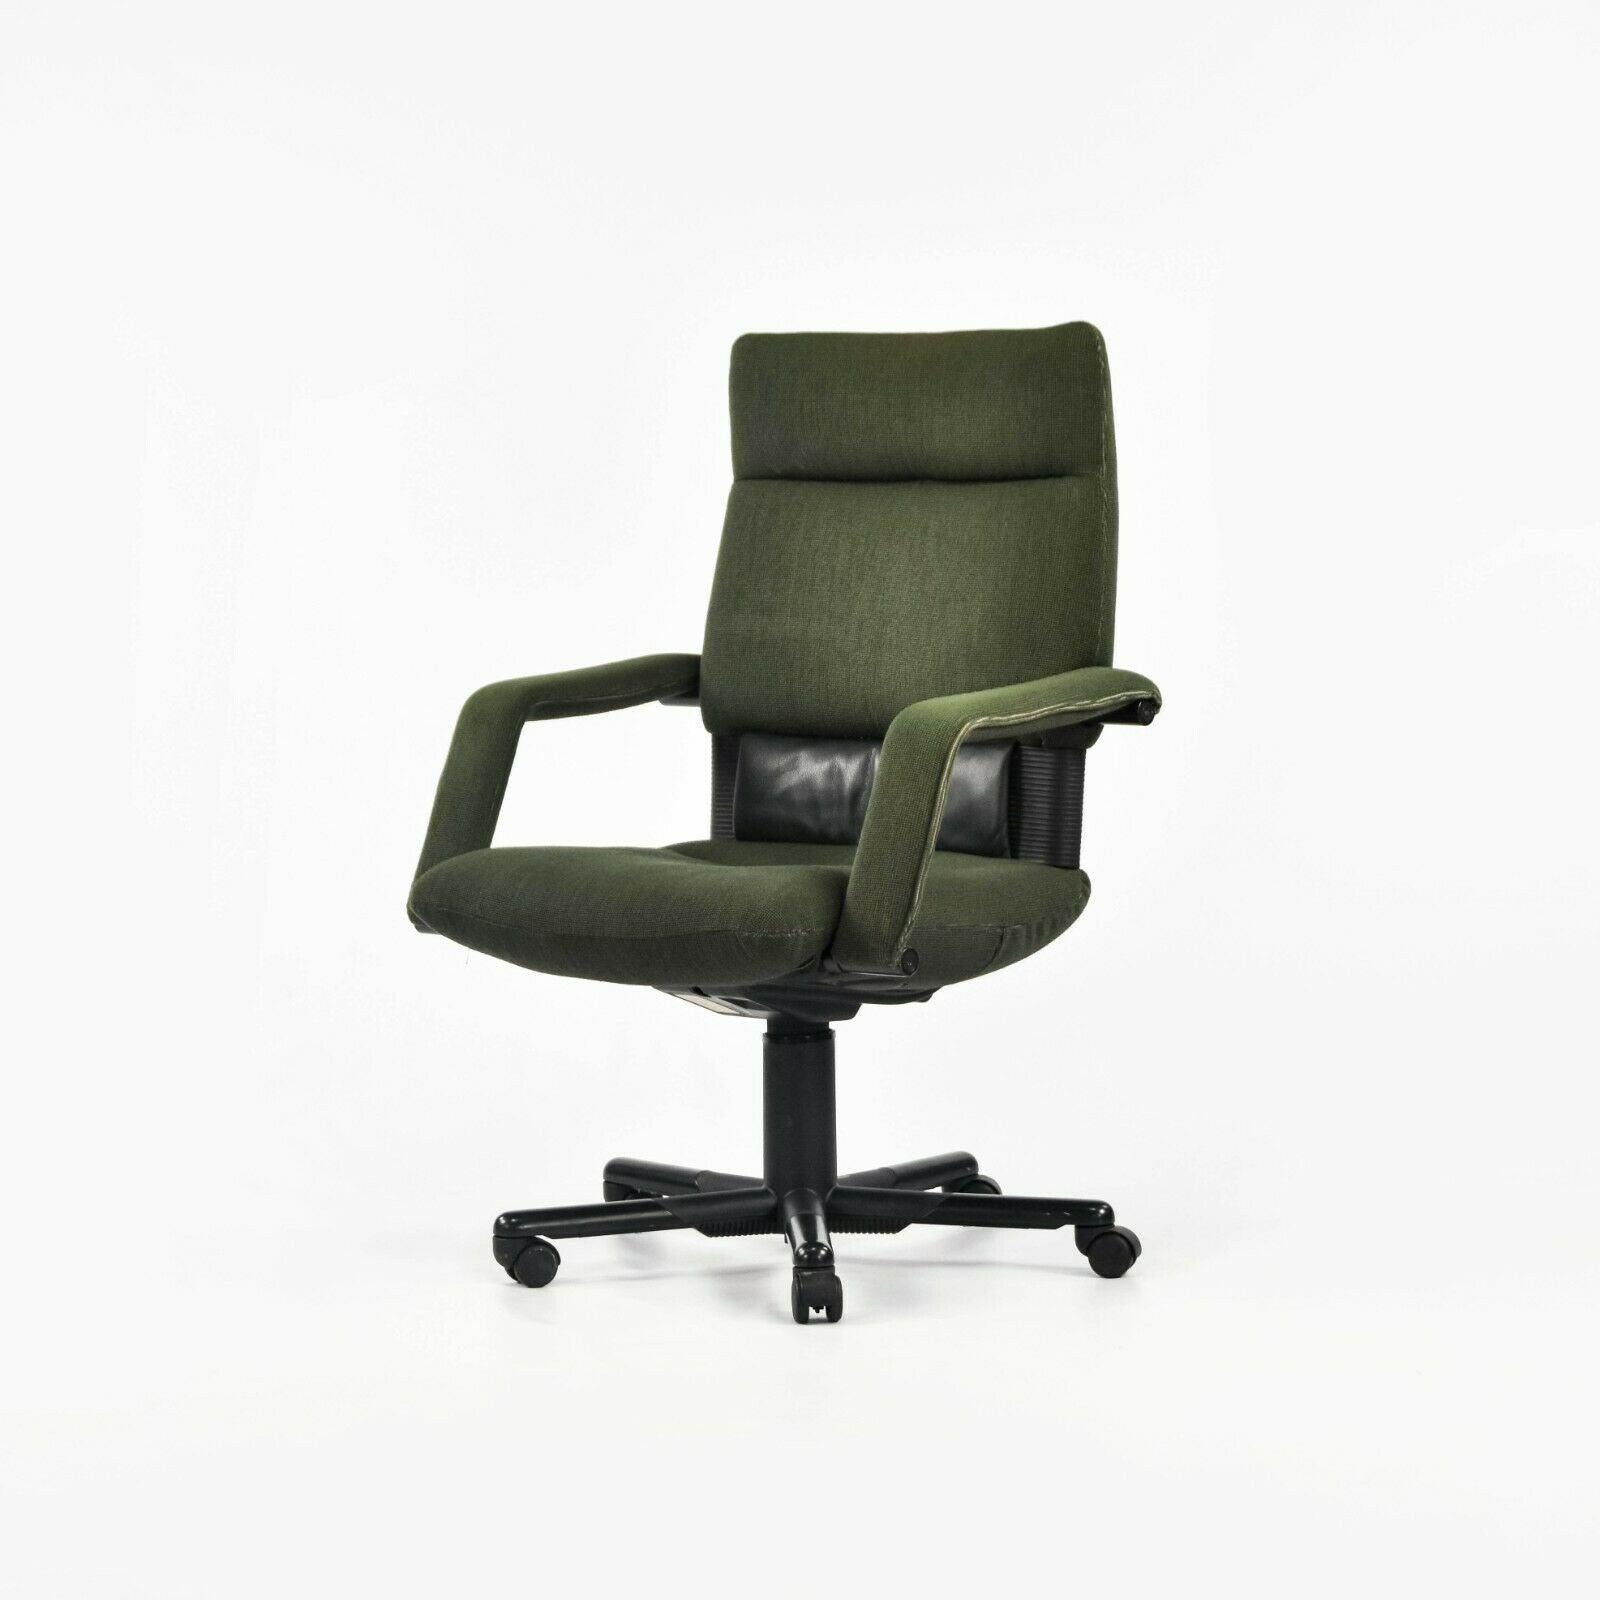 1997 Mario Bellini Vitra Figura Post Modern High Back Desk Chair in Green Fabric For Sale 2